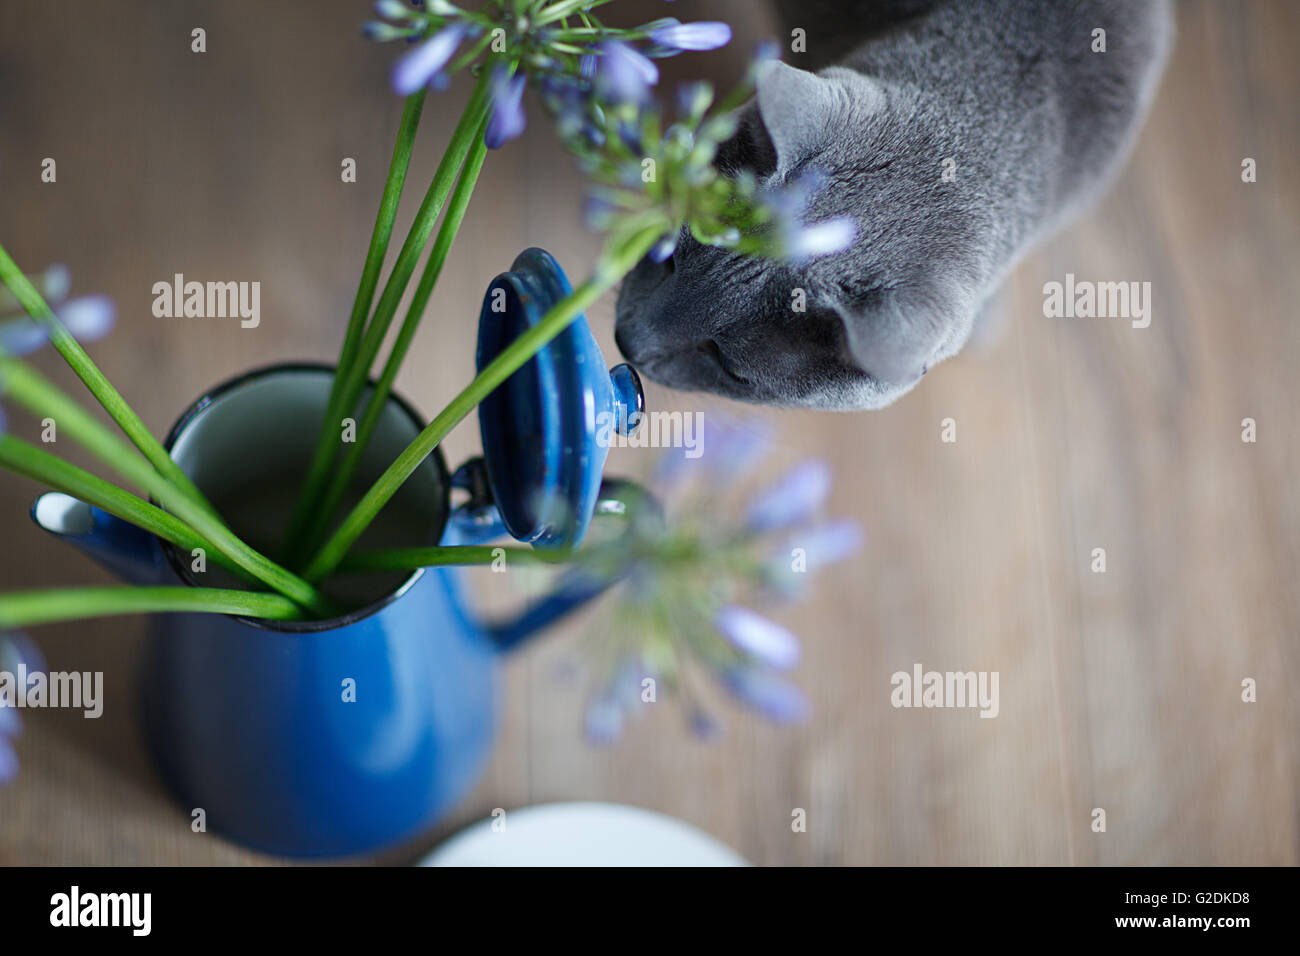 Neugierige Katze inspiziert Blumen in Kanne Stock Photo